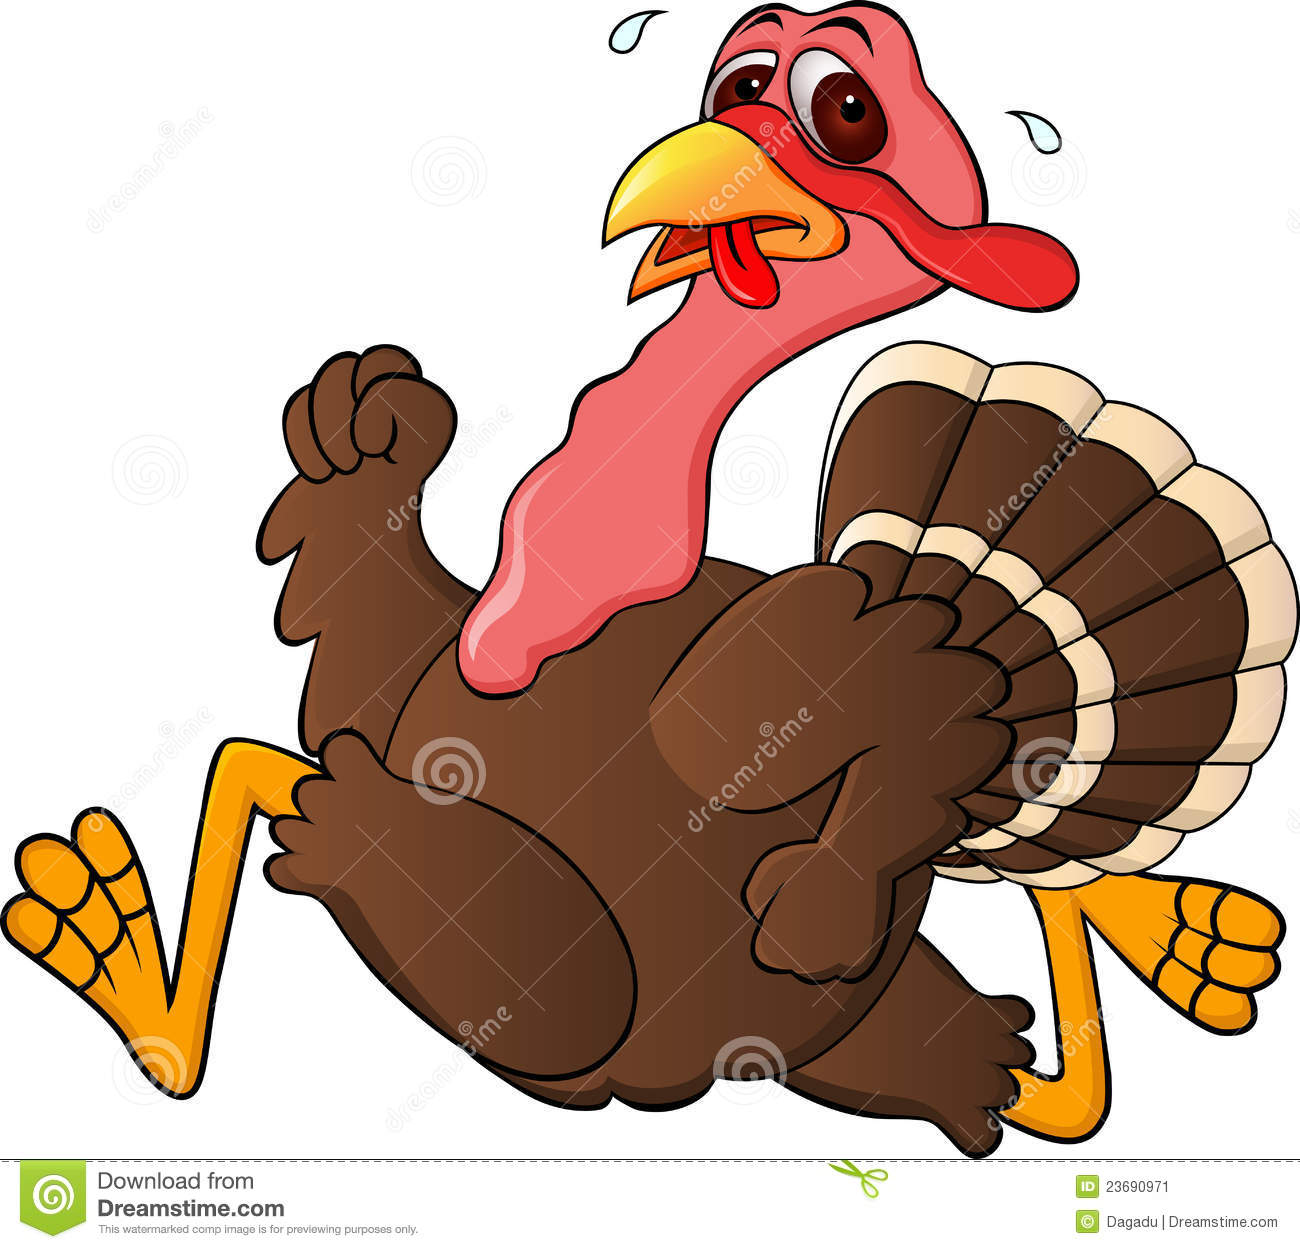 Funny Turkey Running Stock Image   Image  23690971